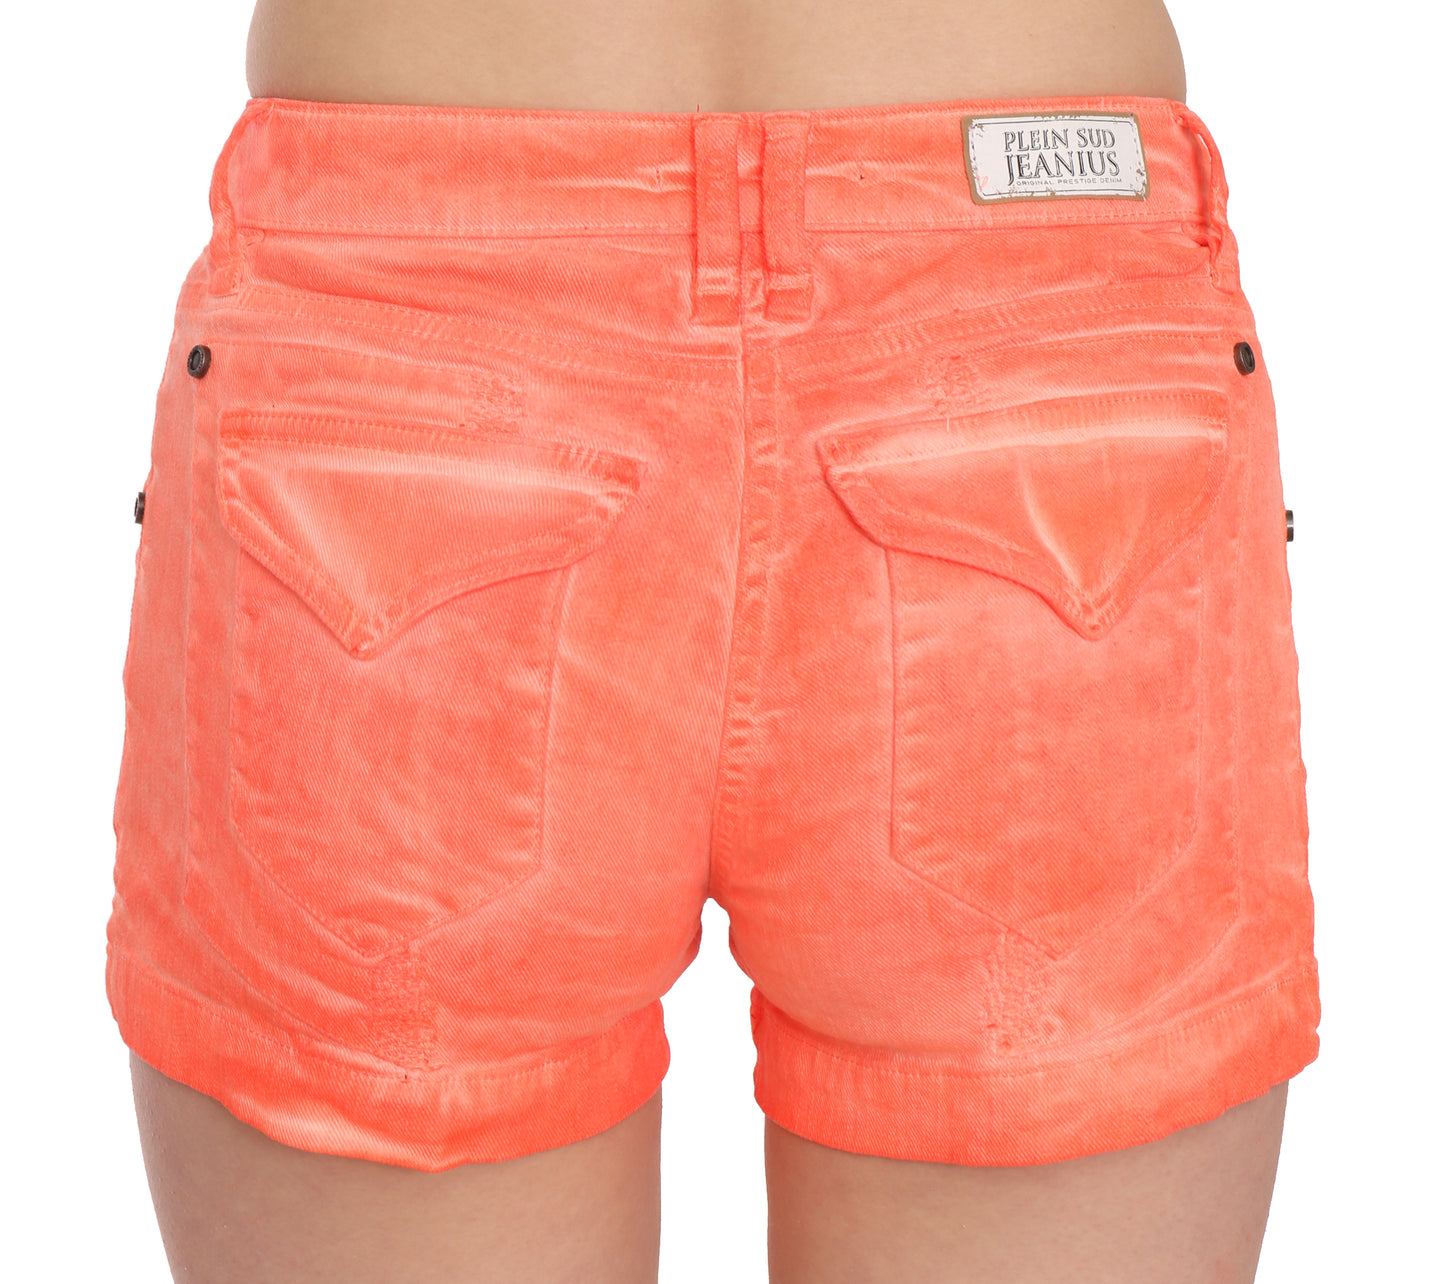 Chic Orange Mid Waist Mini Shorts